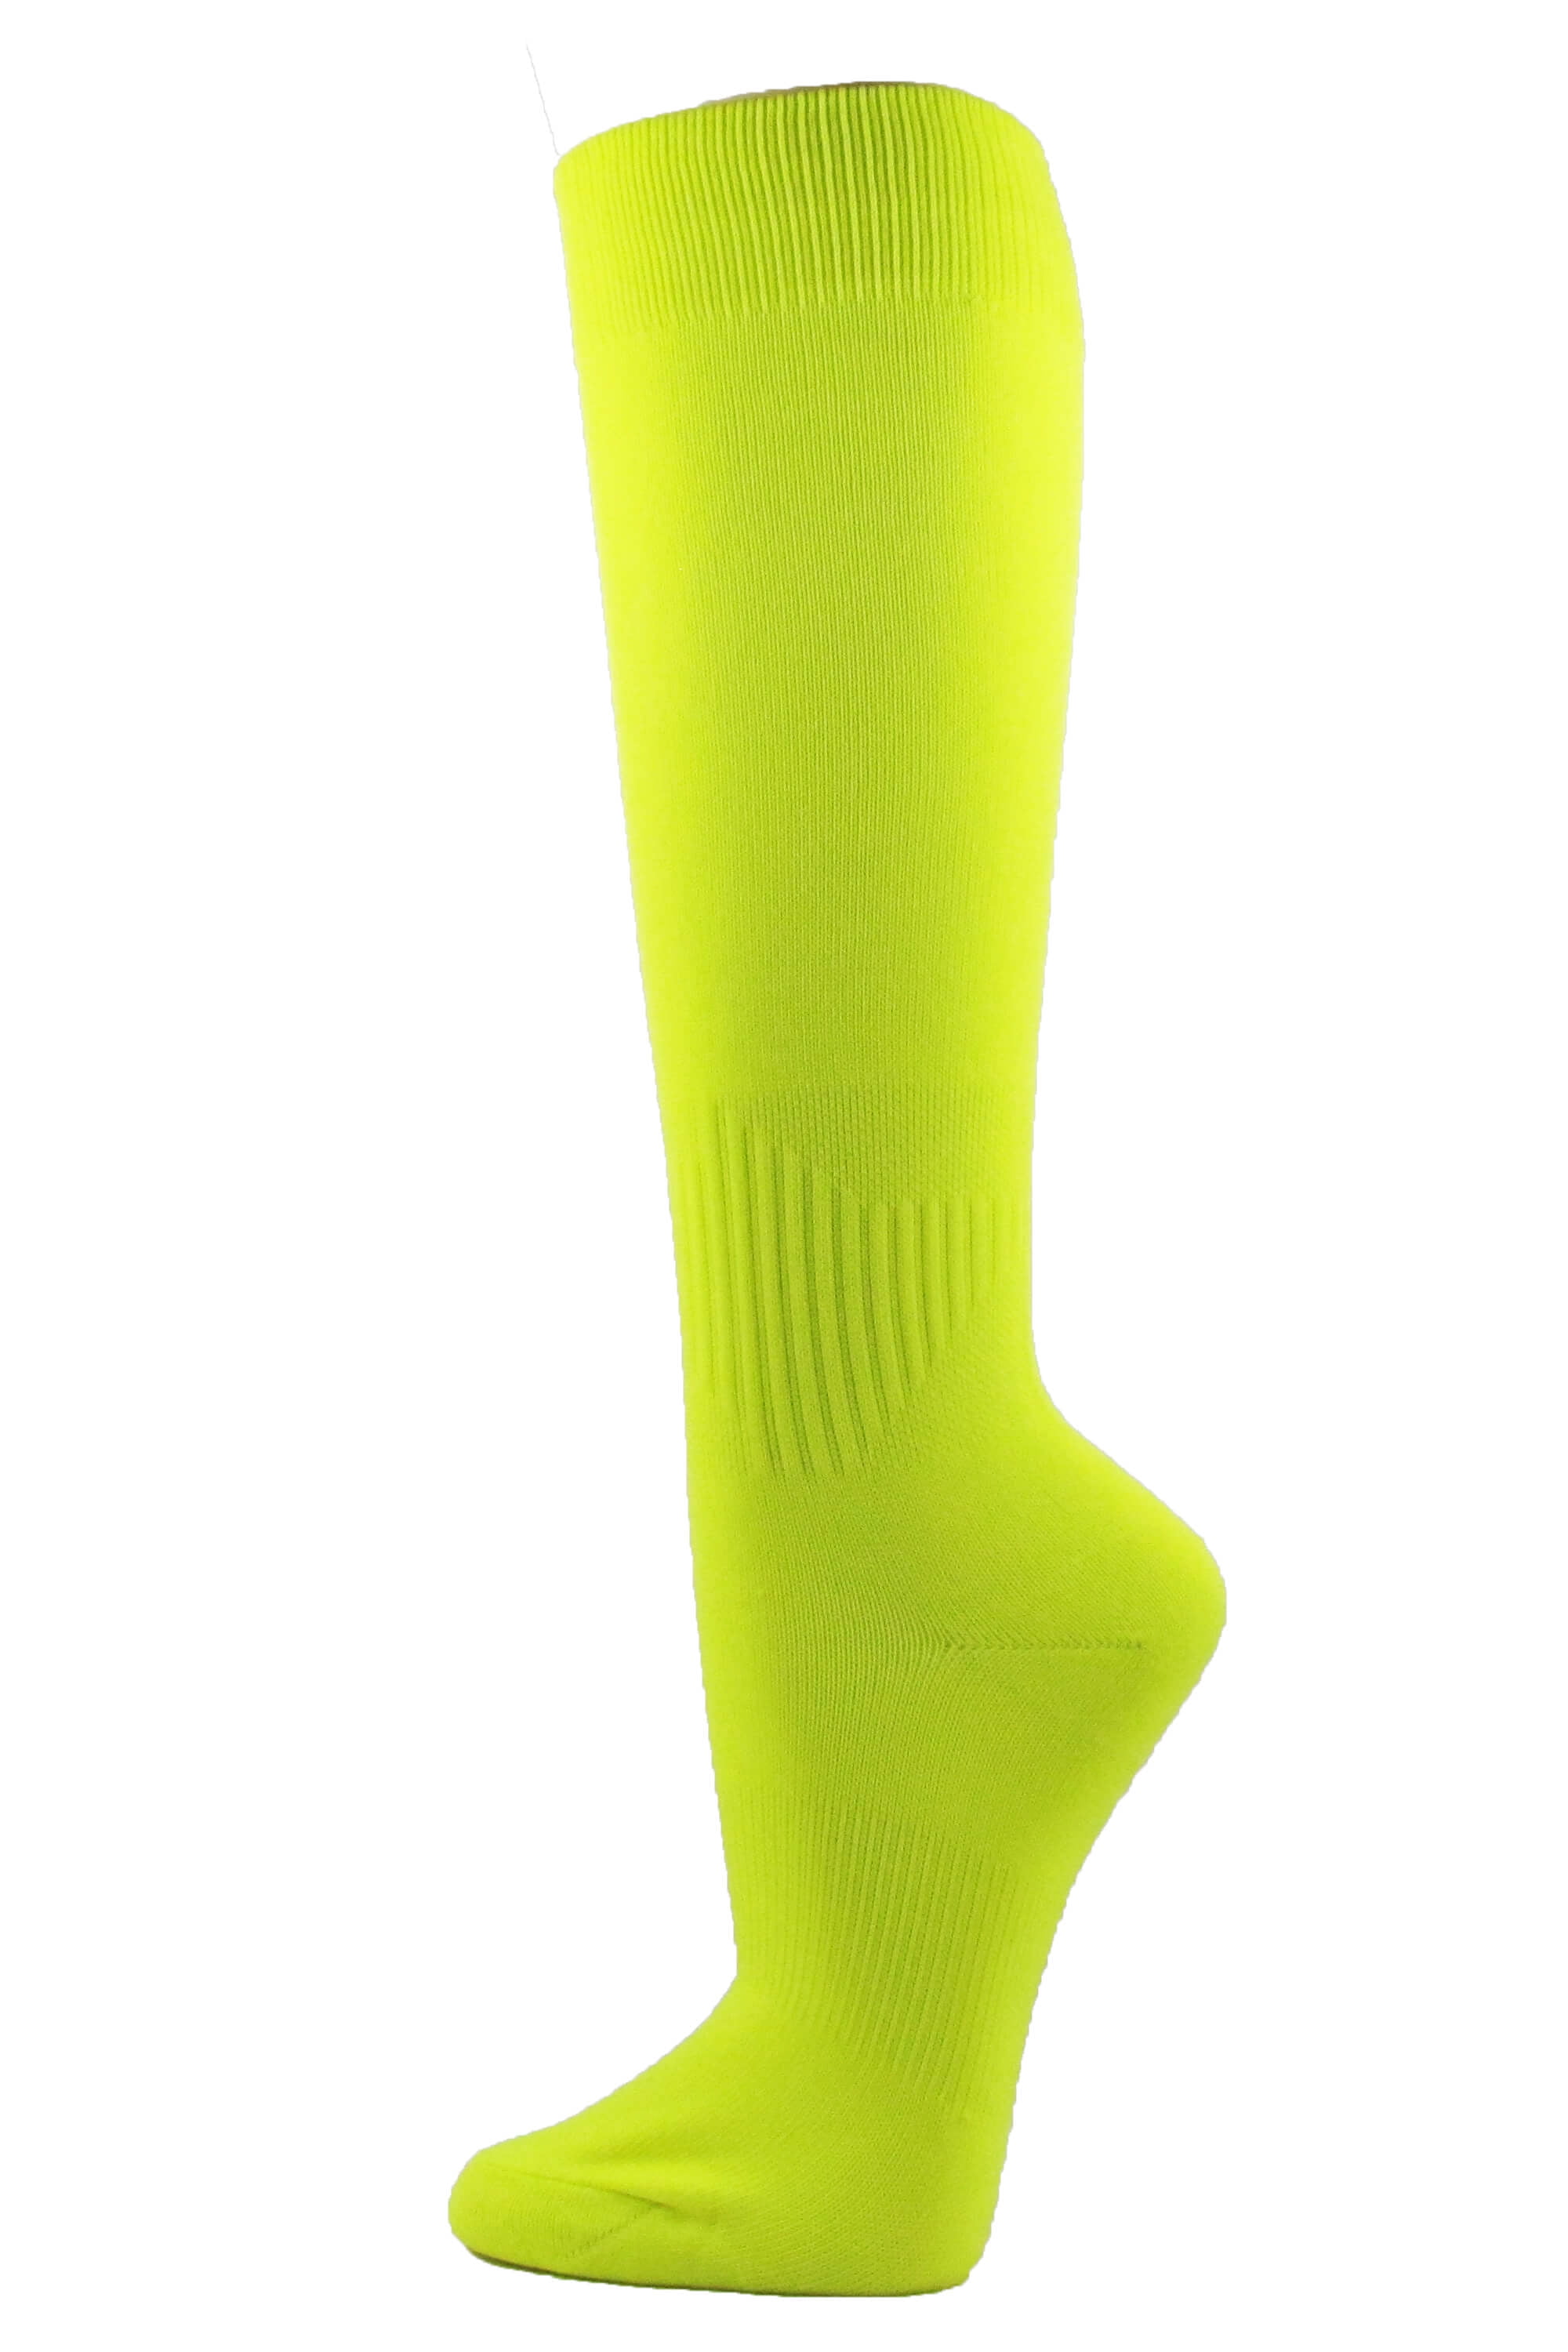 High Five Sports Premier Soccer Football Neon Lime Green 30" Socks Large NEW 